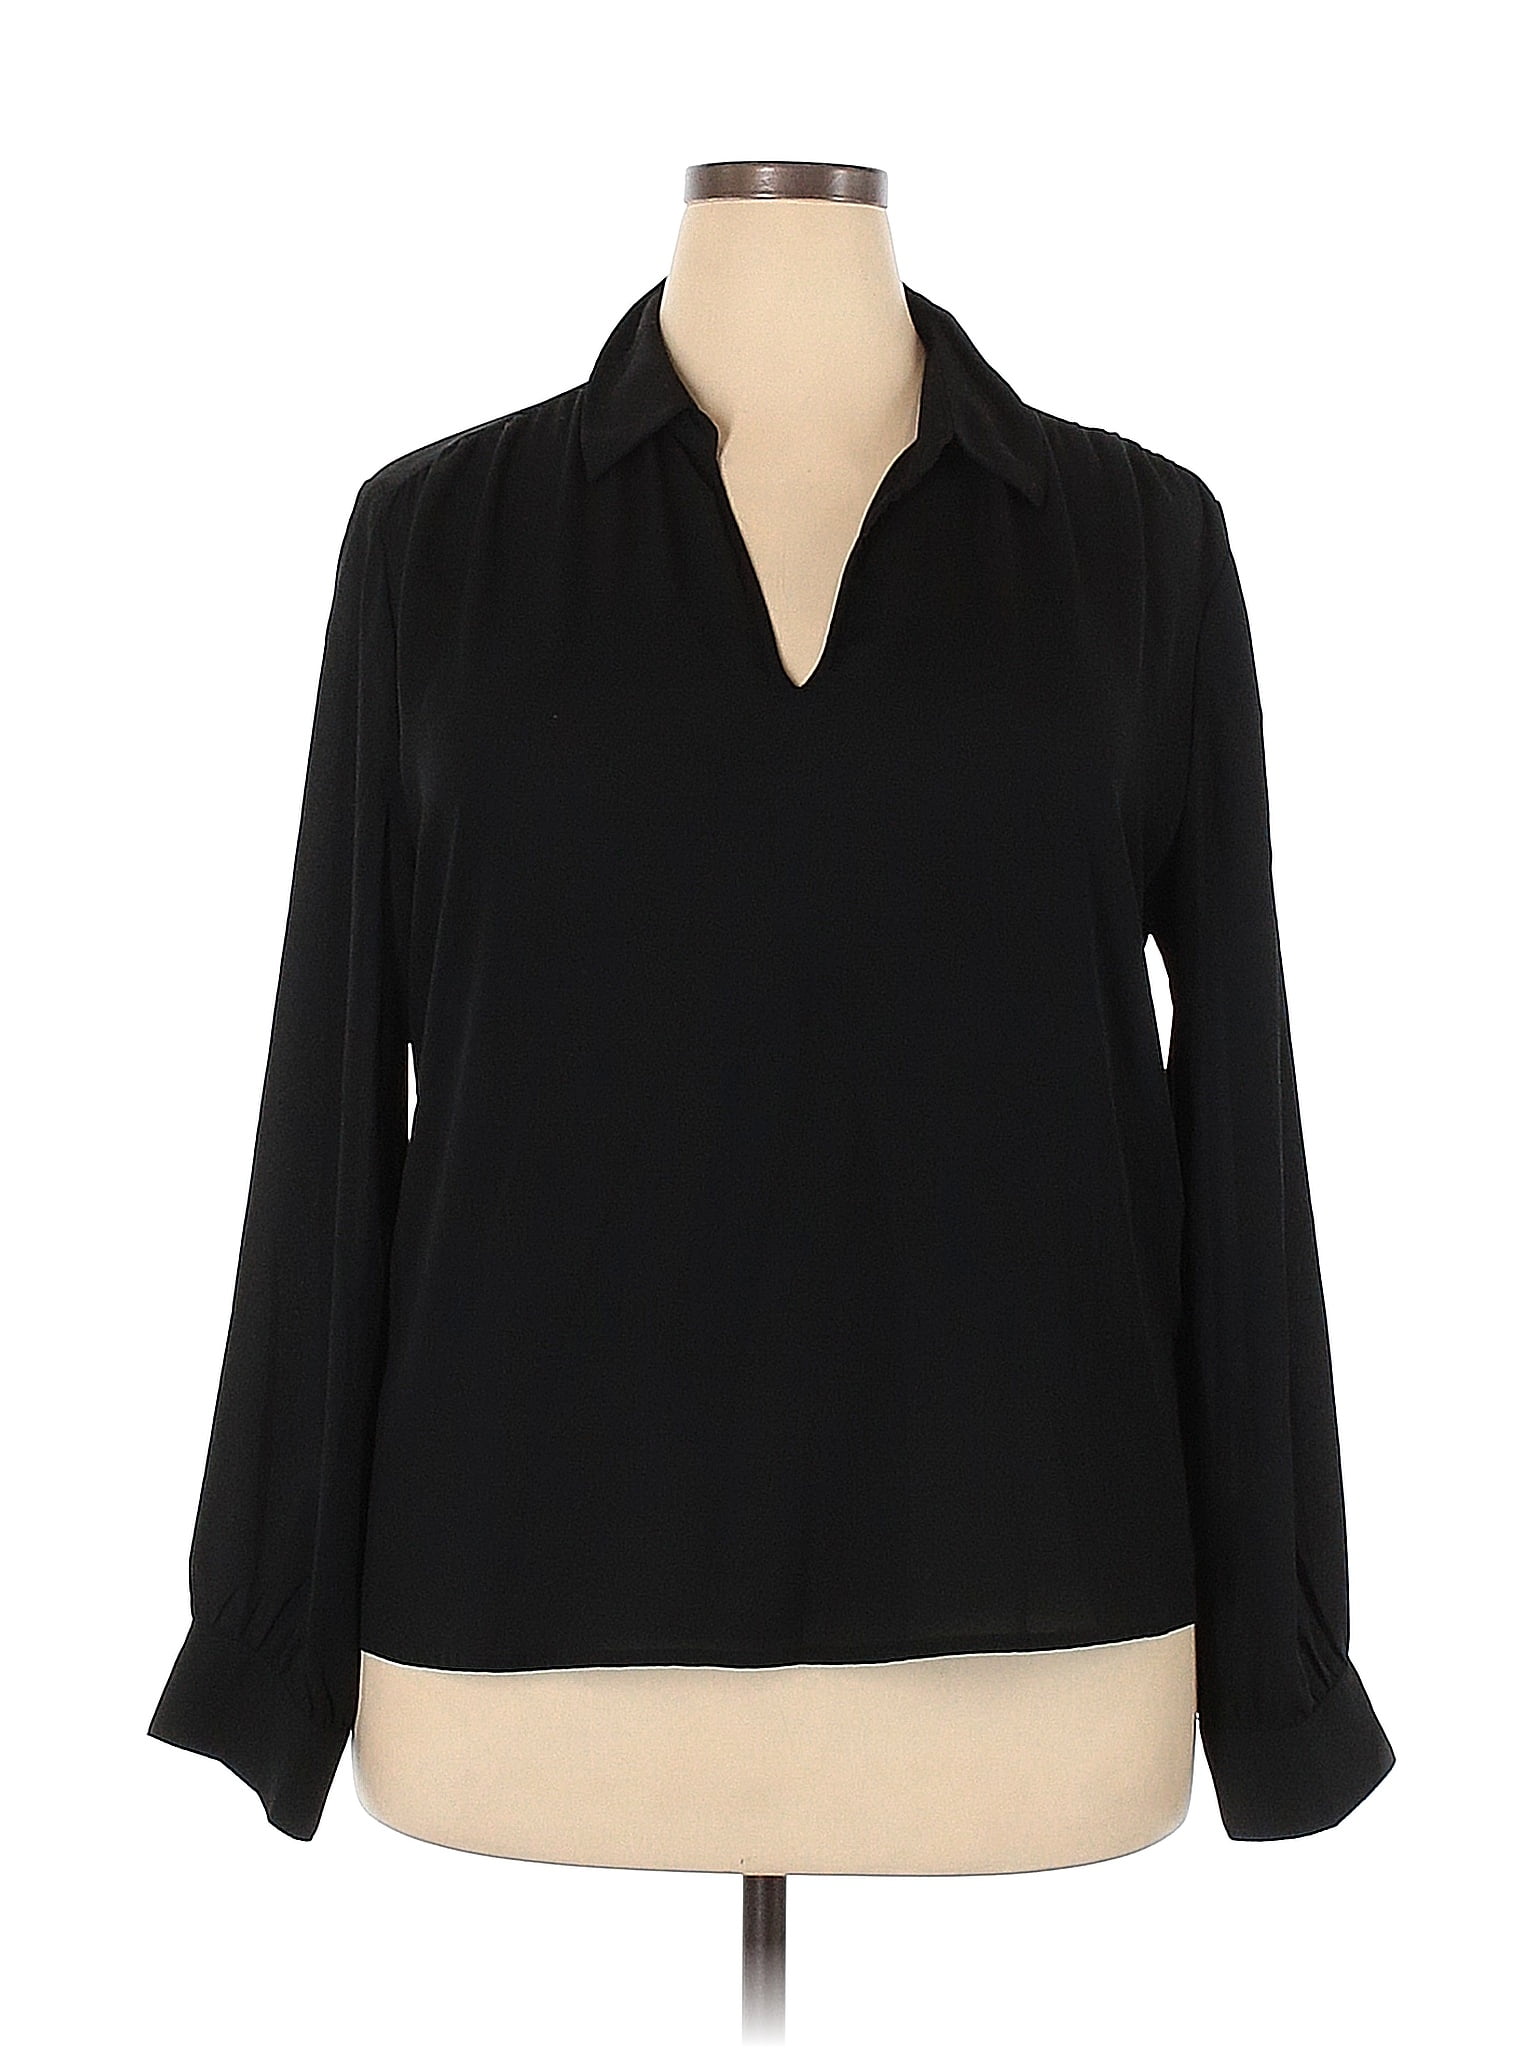 New York & Company 100% Polyester Black Long Sleeve Blouse Size XXL ...